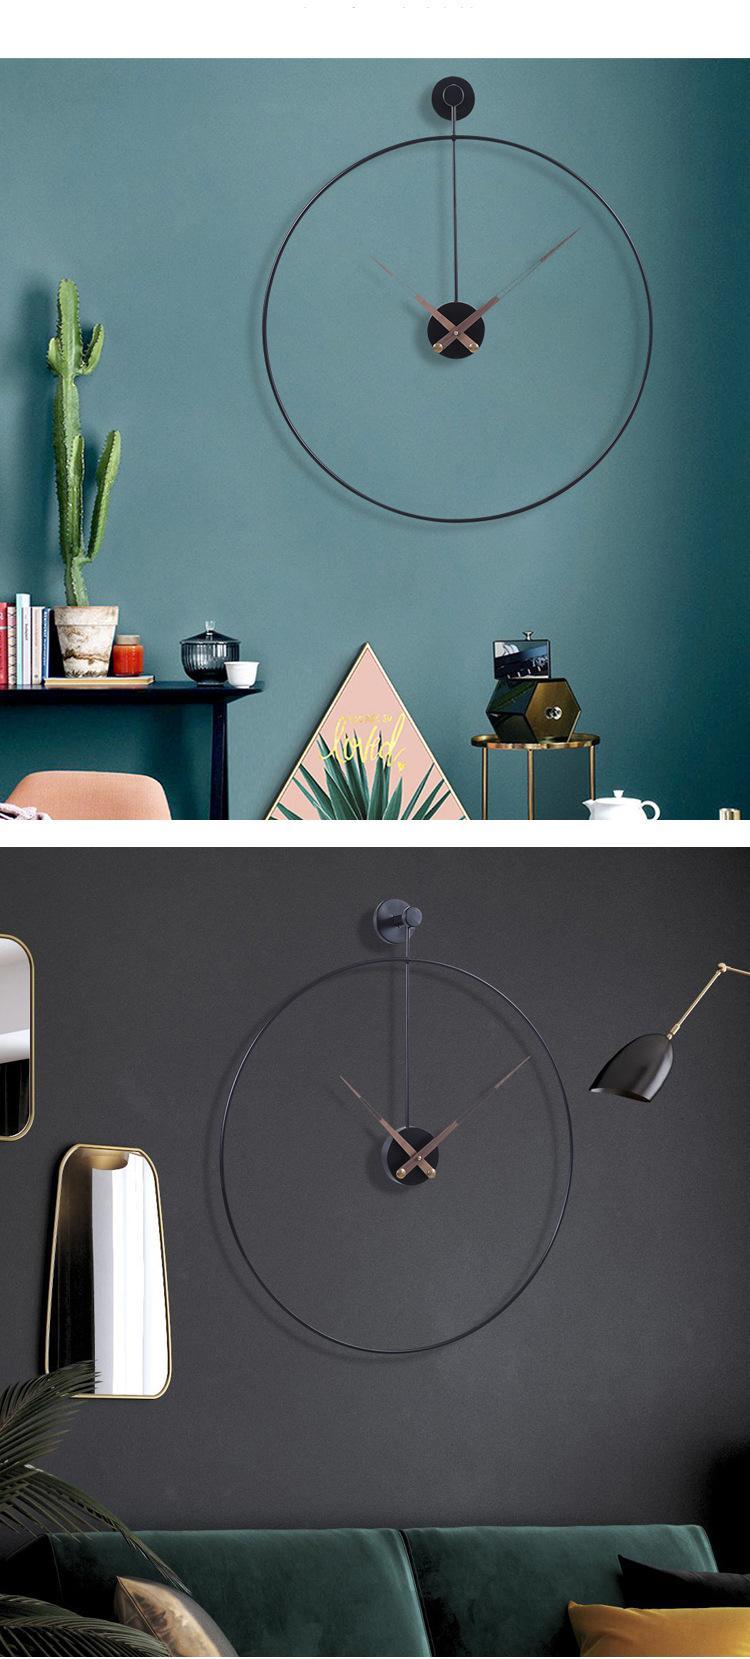 Luxury Creative Wall Clock Modern Design Nordic Simple Silent Metal Fashion Wall Clock Living Room Reloj Pared Home Decor DG50WC